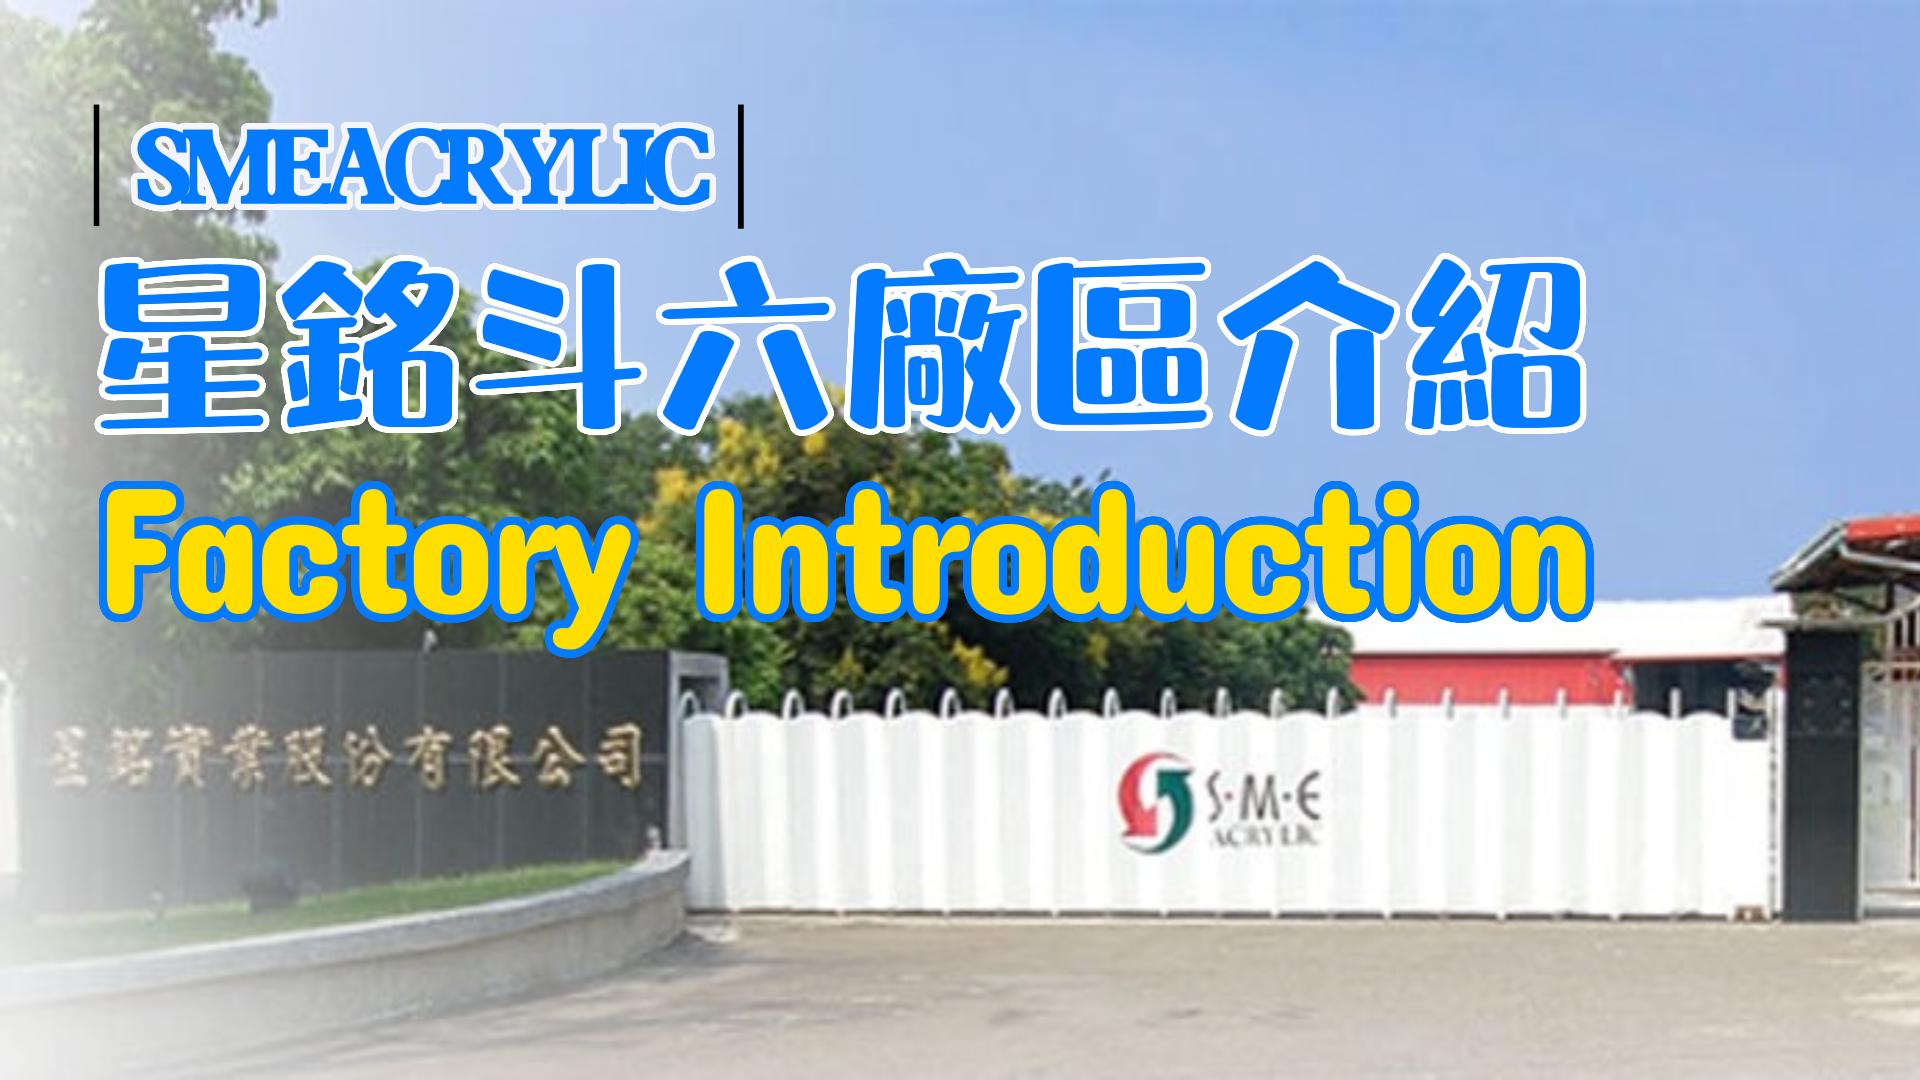 SMEACRYLIC Factory Introduction